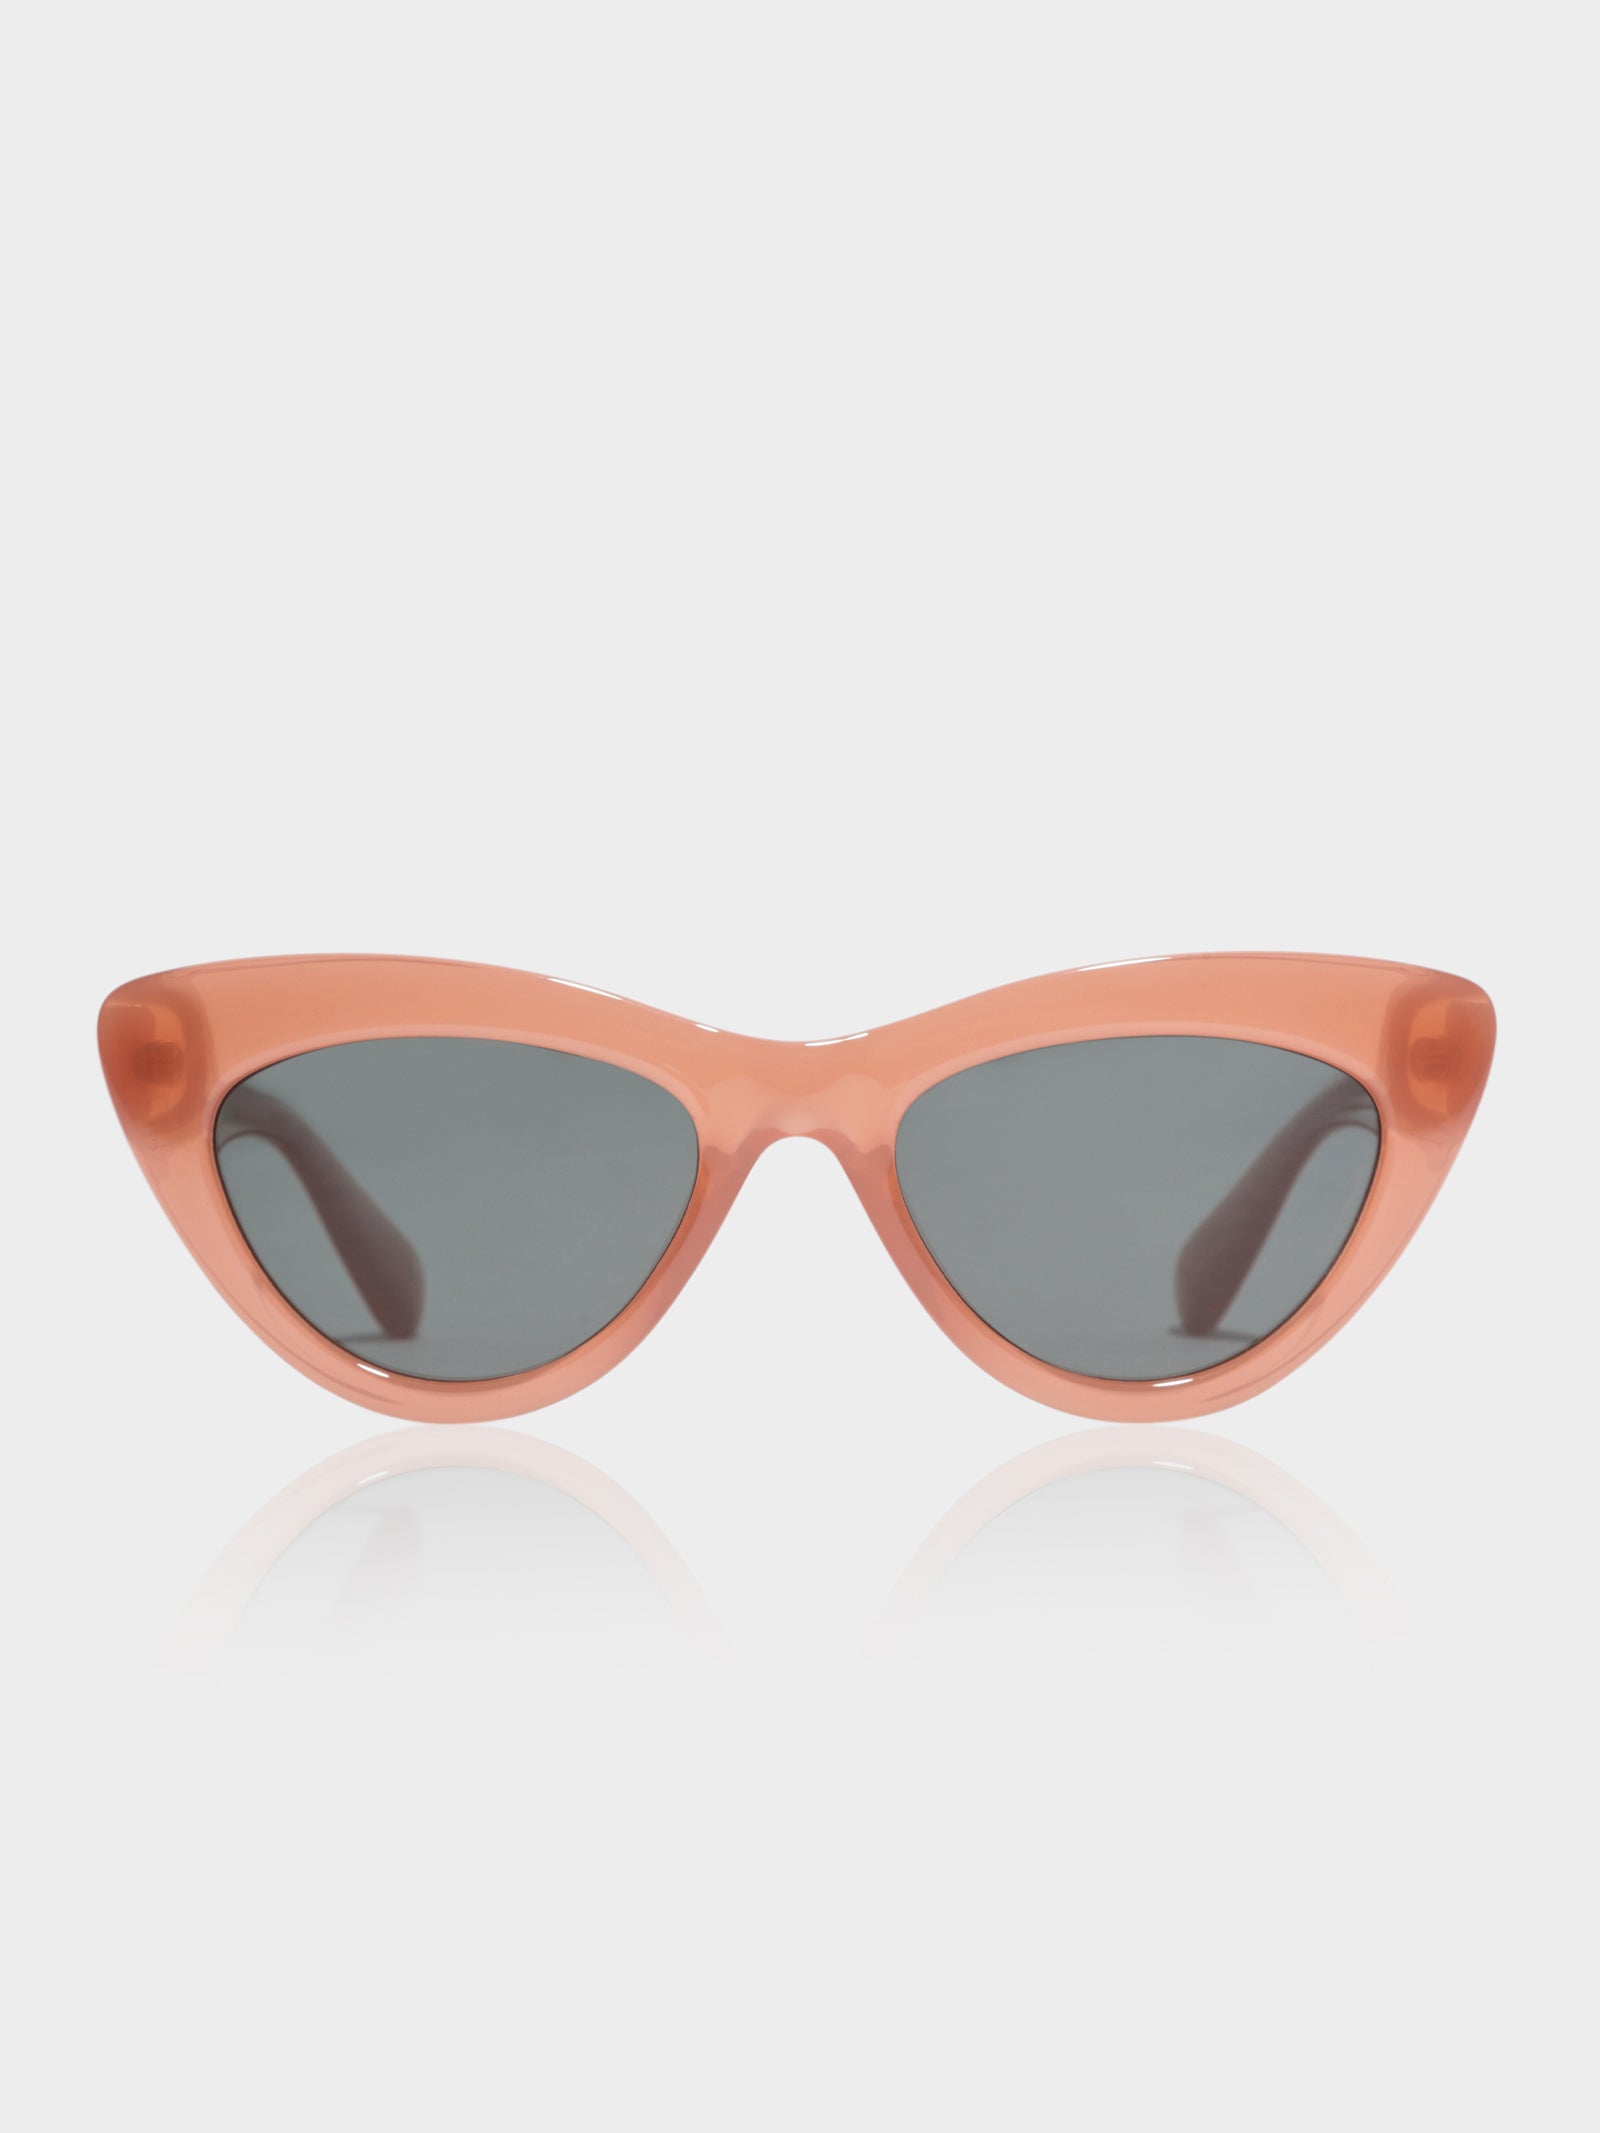 AMS Polarised Cateye Sunglasses in Polished Coral & Dark Grey